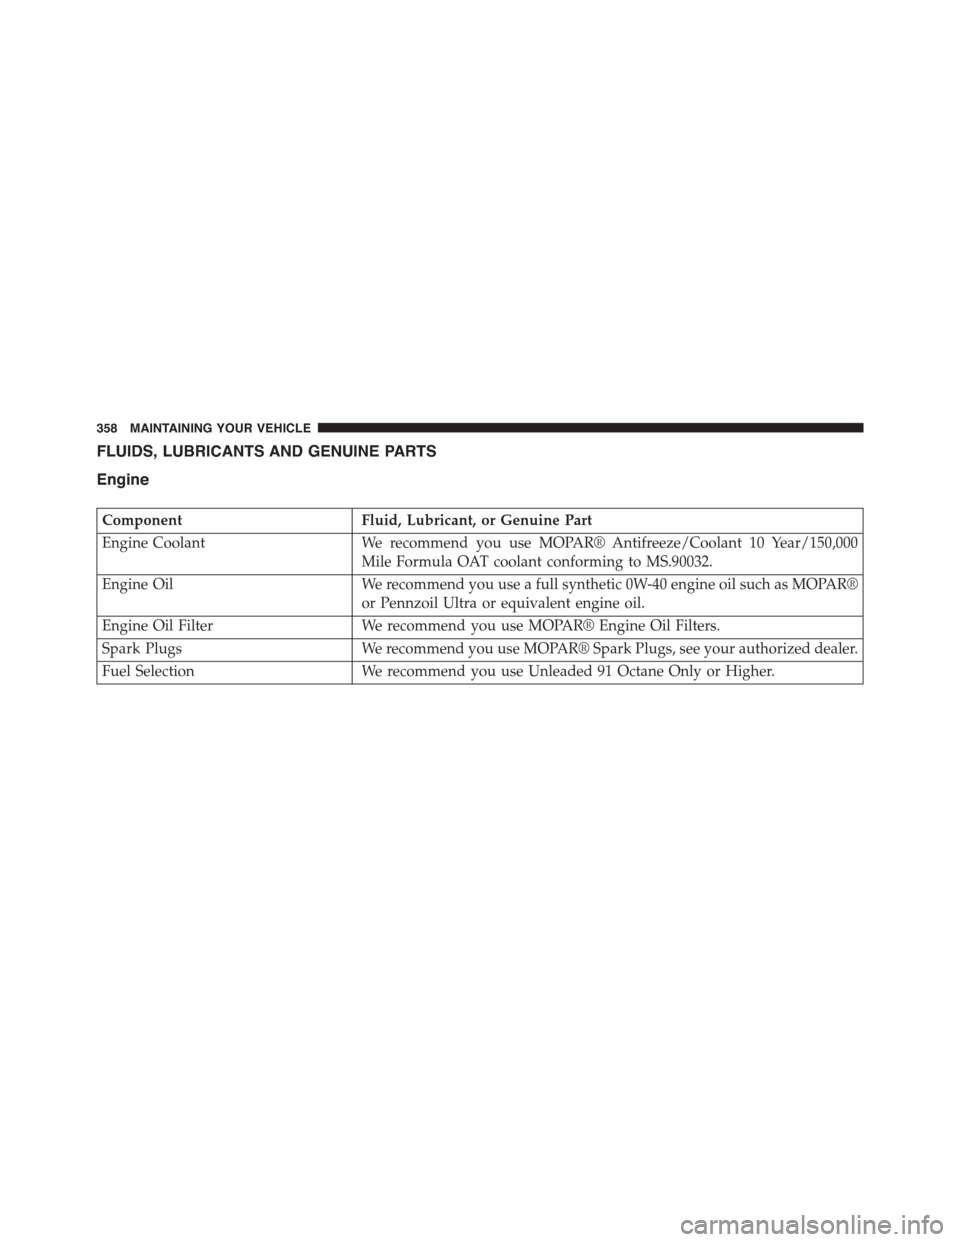 DODGE VIPER 2015 VX / 3.G Owners Manual FLUIDS, LUBRICANTS AND GENUINE PARTS
Engine
ComponentFluid, Lubricant, or Genuine Part
Engine CoolantWe recommend you use MOPAR® Antifreeze/Coolant 10 Year/150,000
Mile Formula OAT coolant conforming